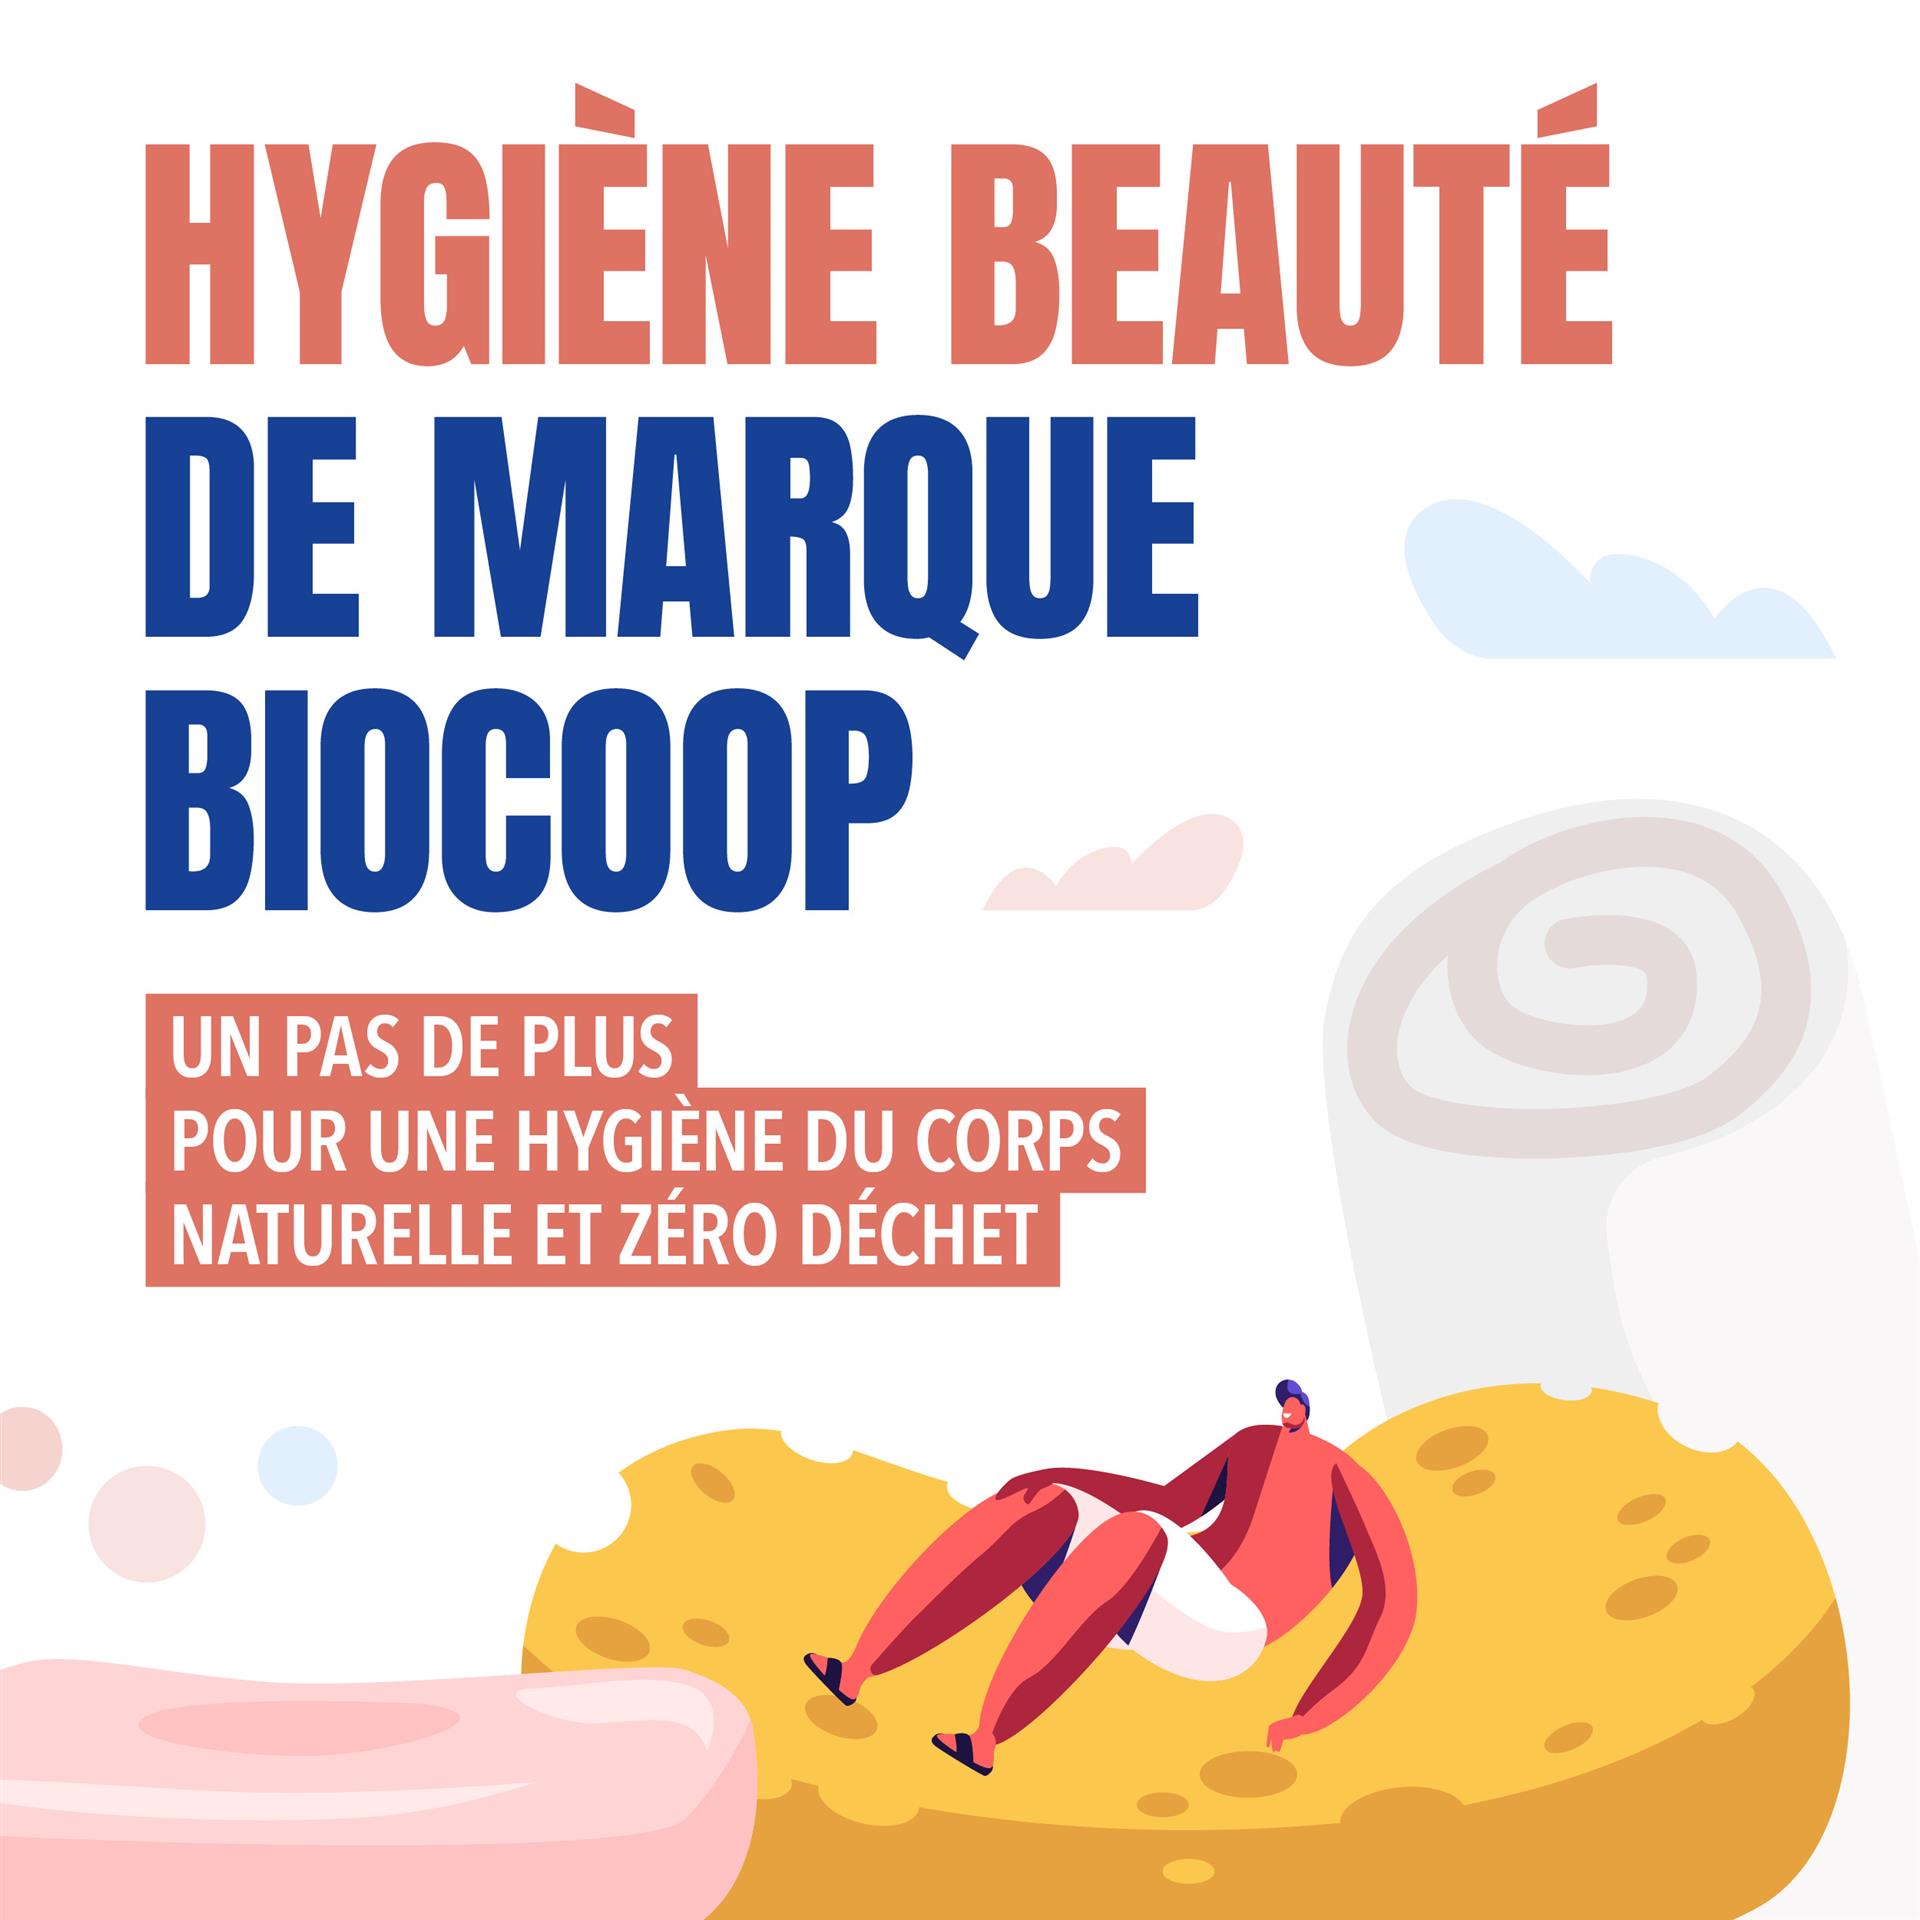 Hygiène Beauté de la marque Biocoop